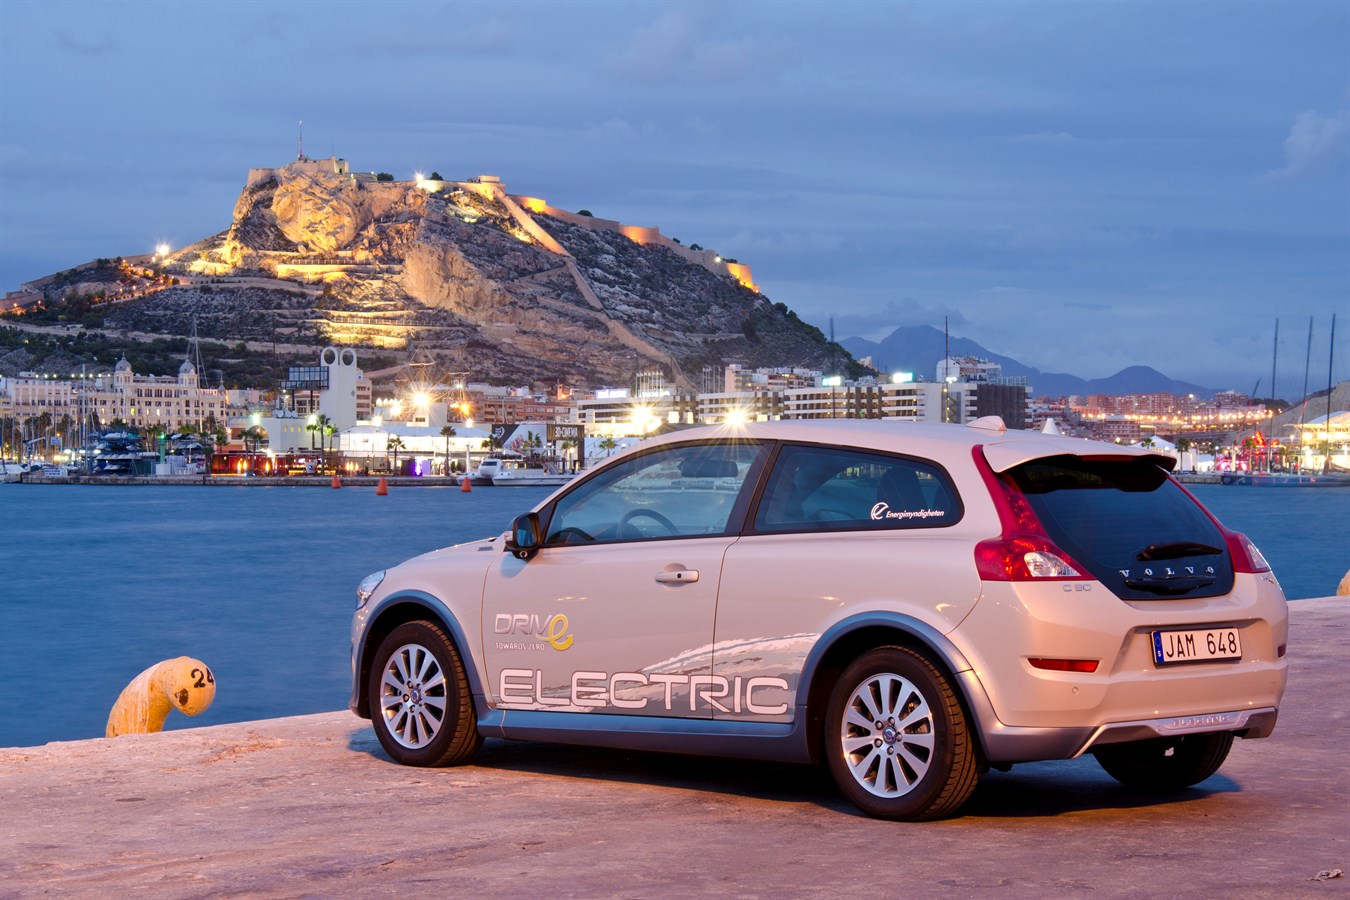 Volvo C30 Electric hundred percent driving pleasure with almost zero